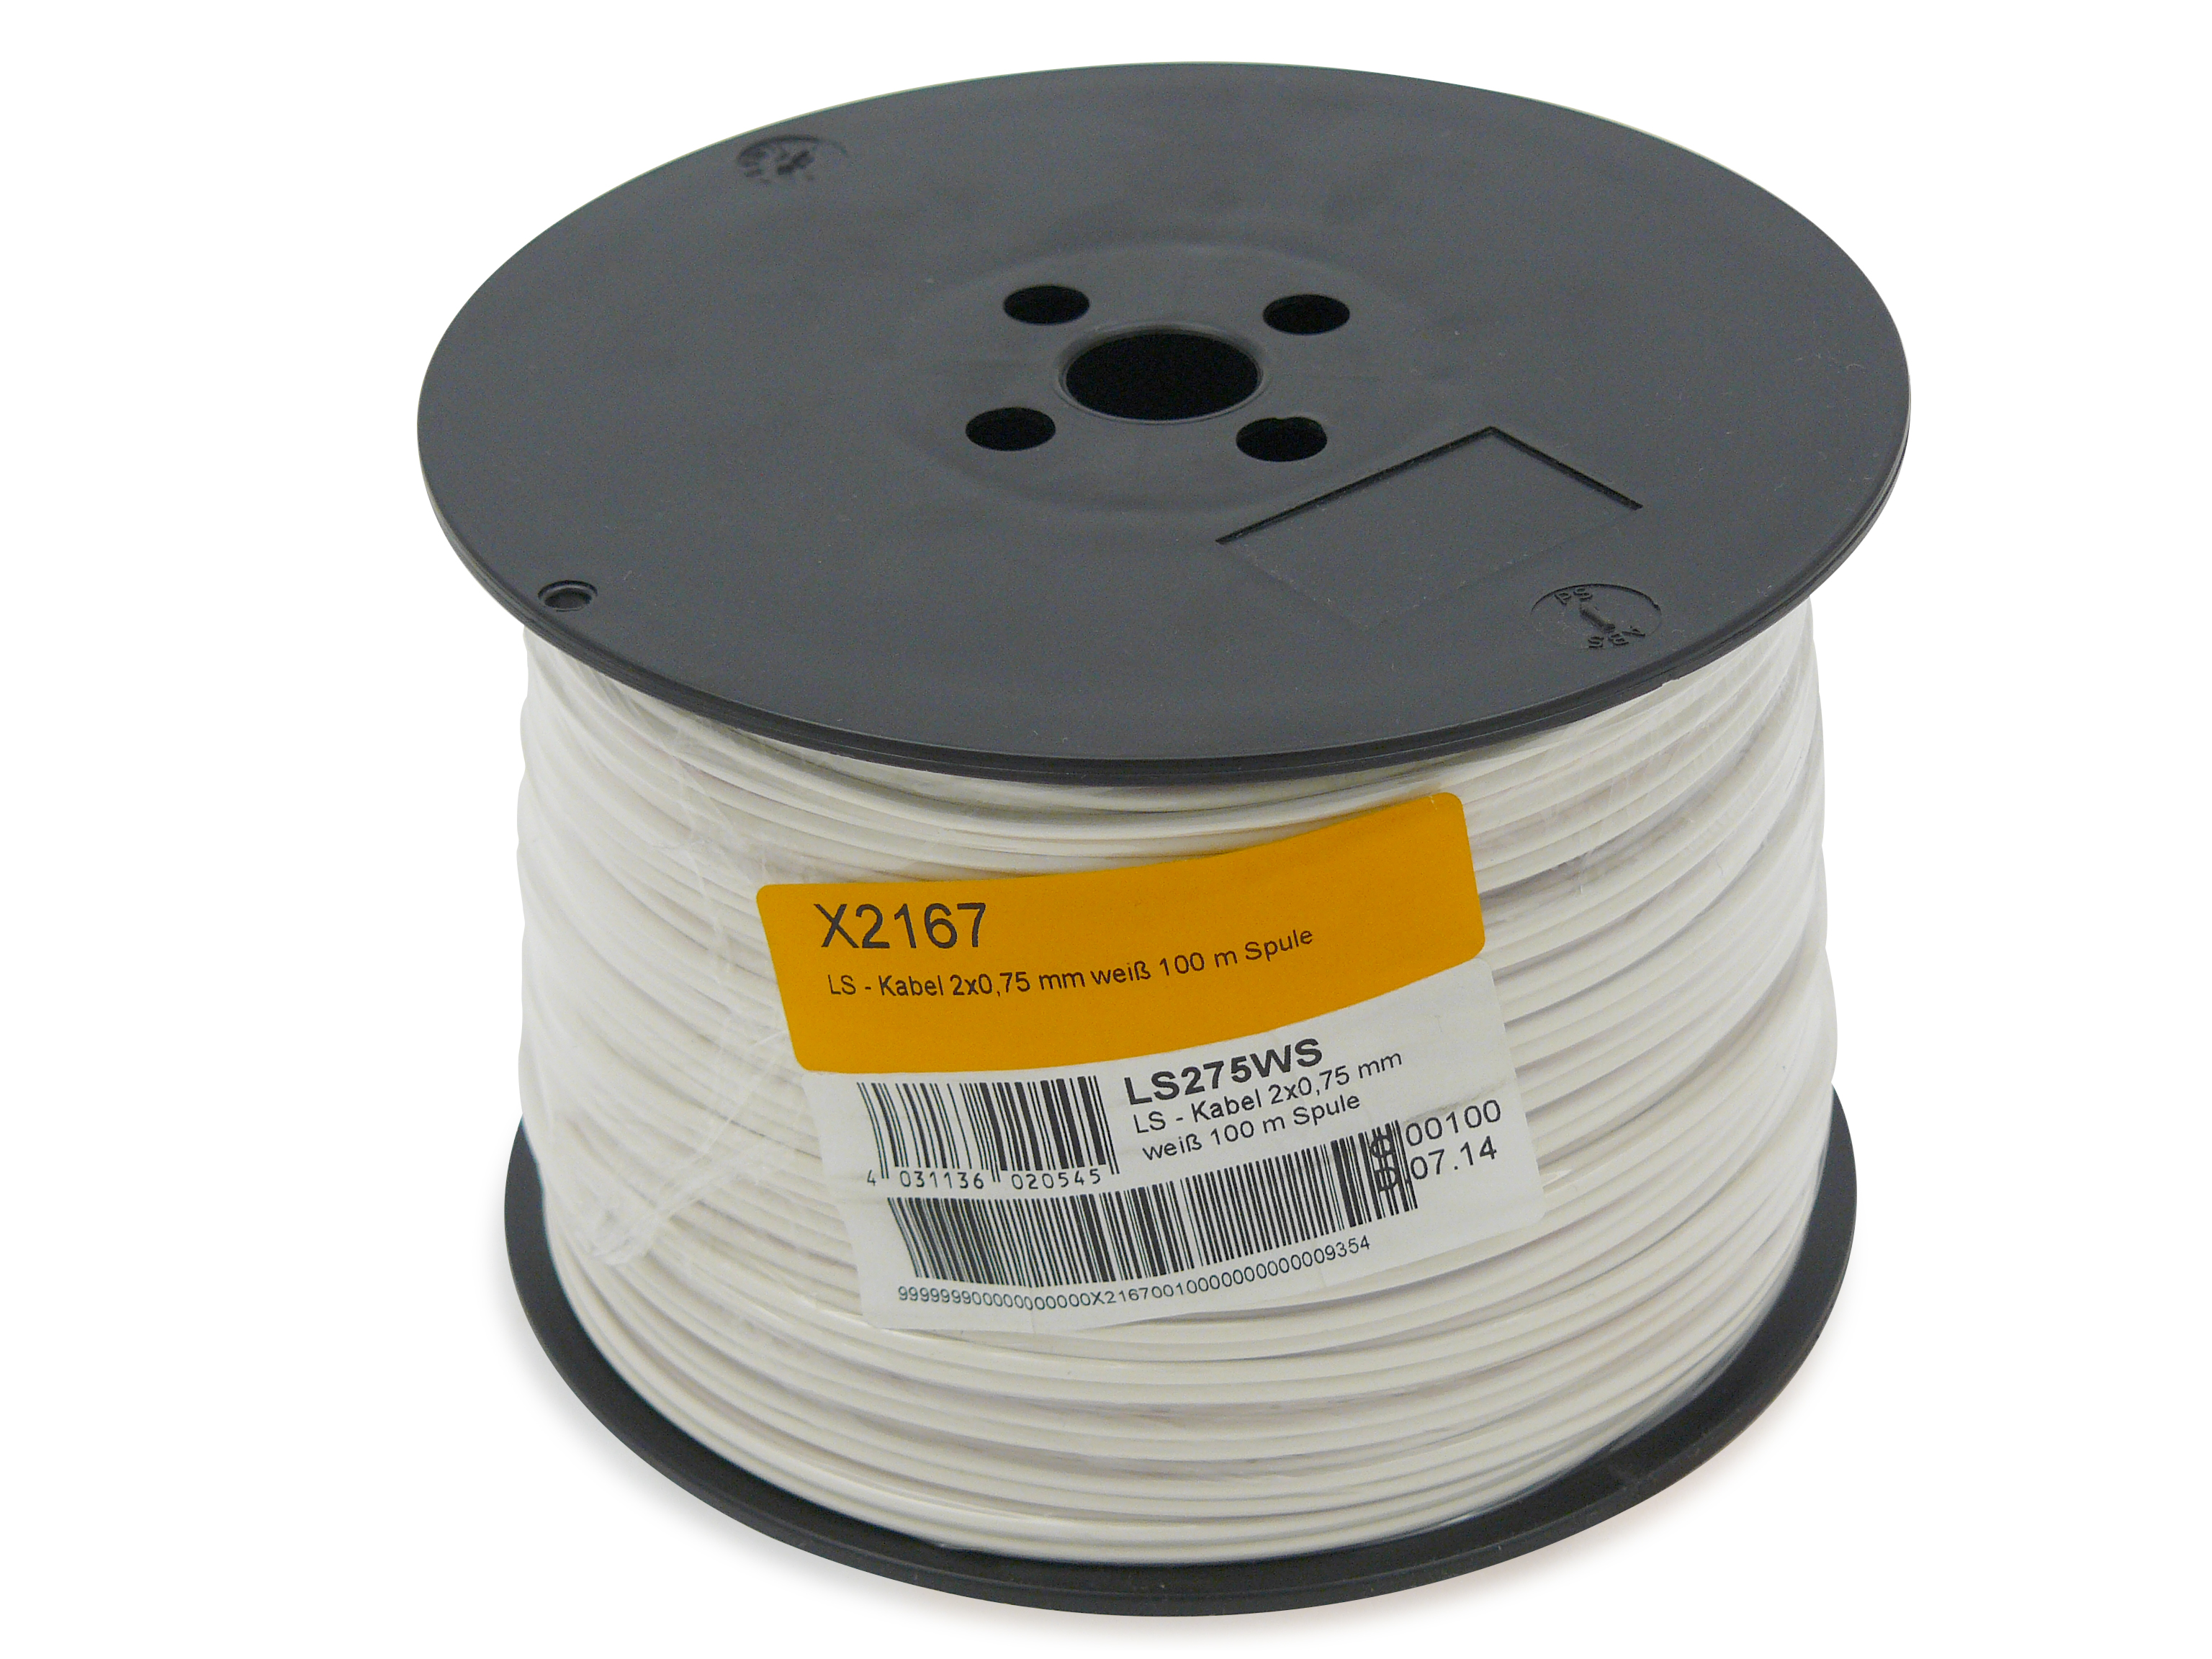 LS - Kabel 2x0,75 mm weiss 100 m Spule